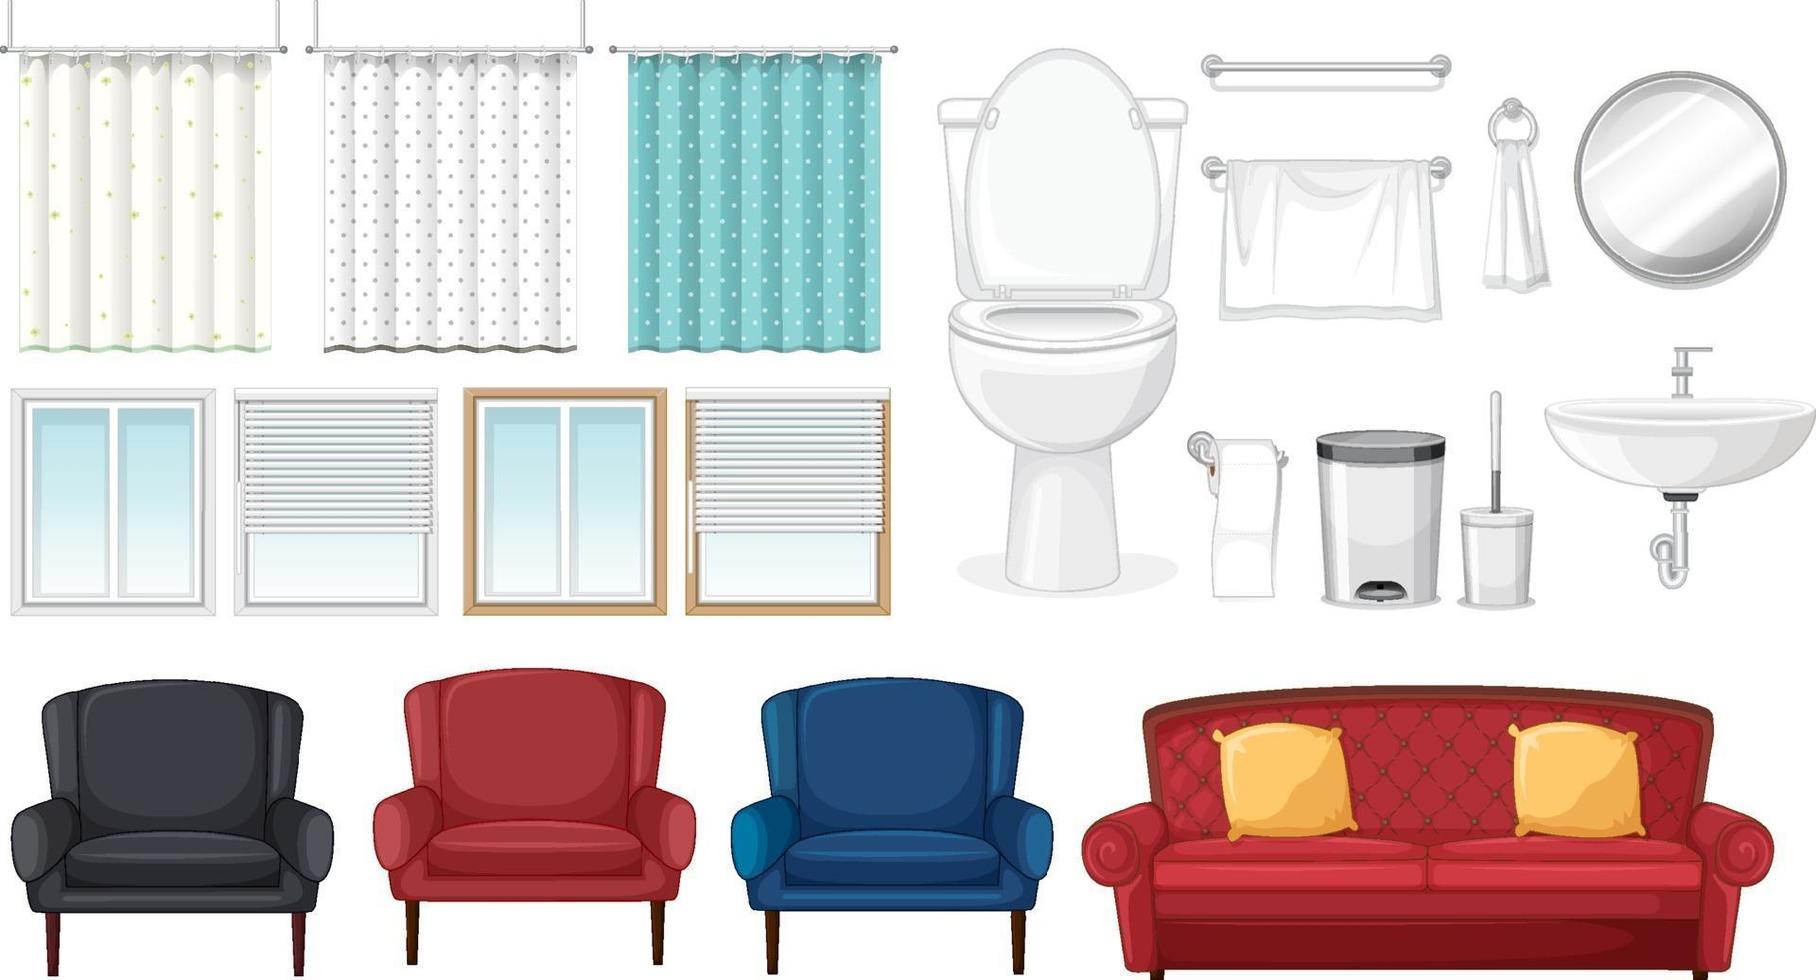 Furniture set for interior design on white background vector